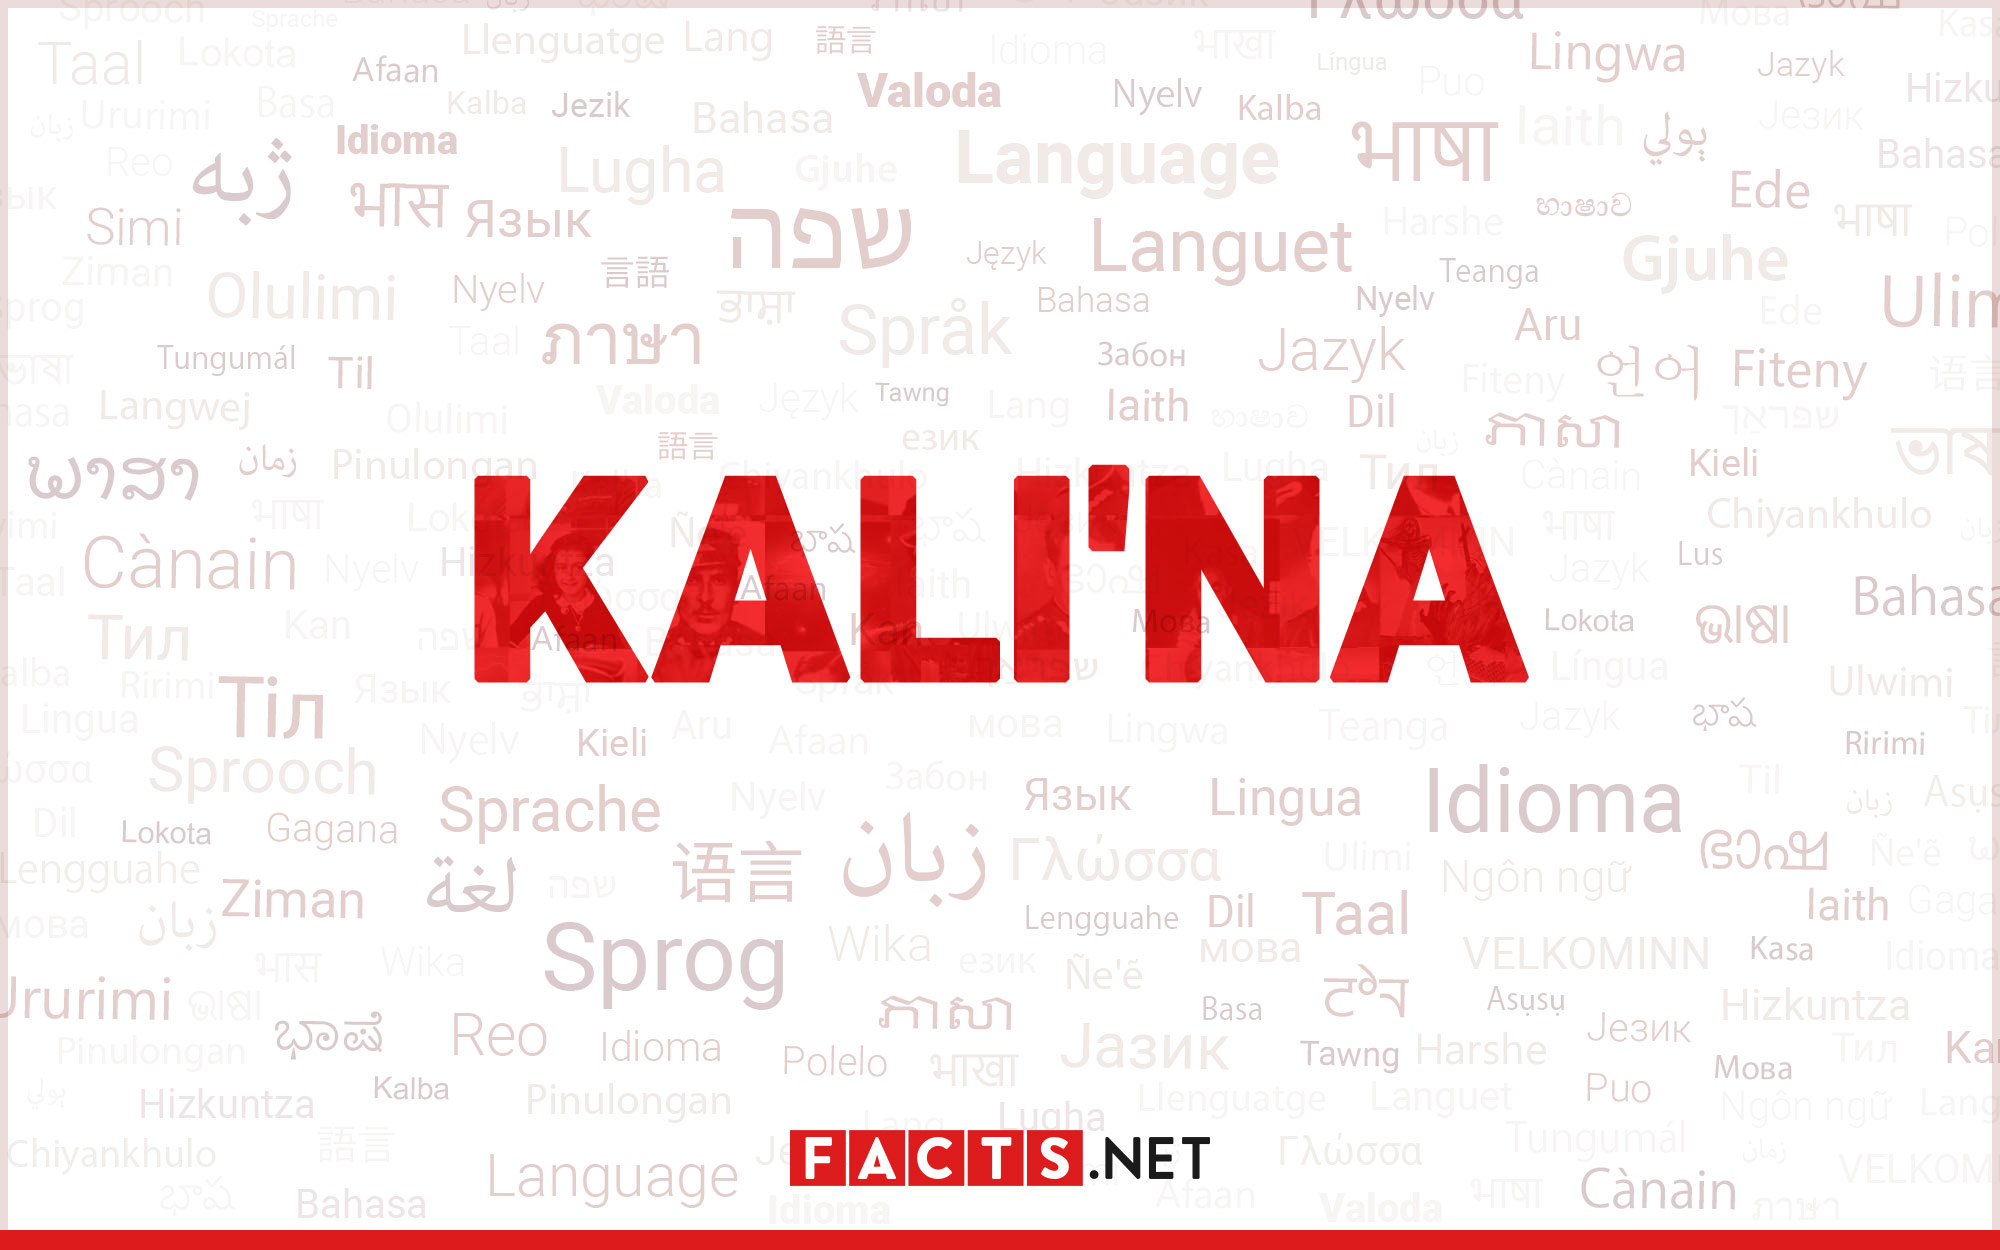 18-captivating-facts-about-kalina